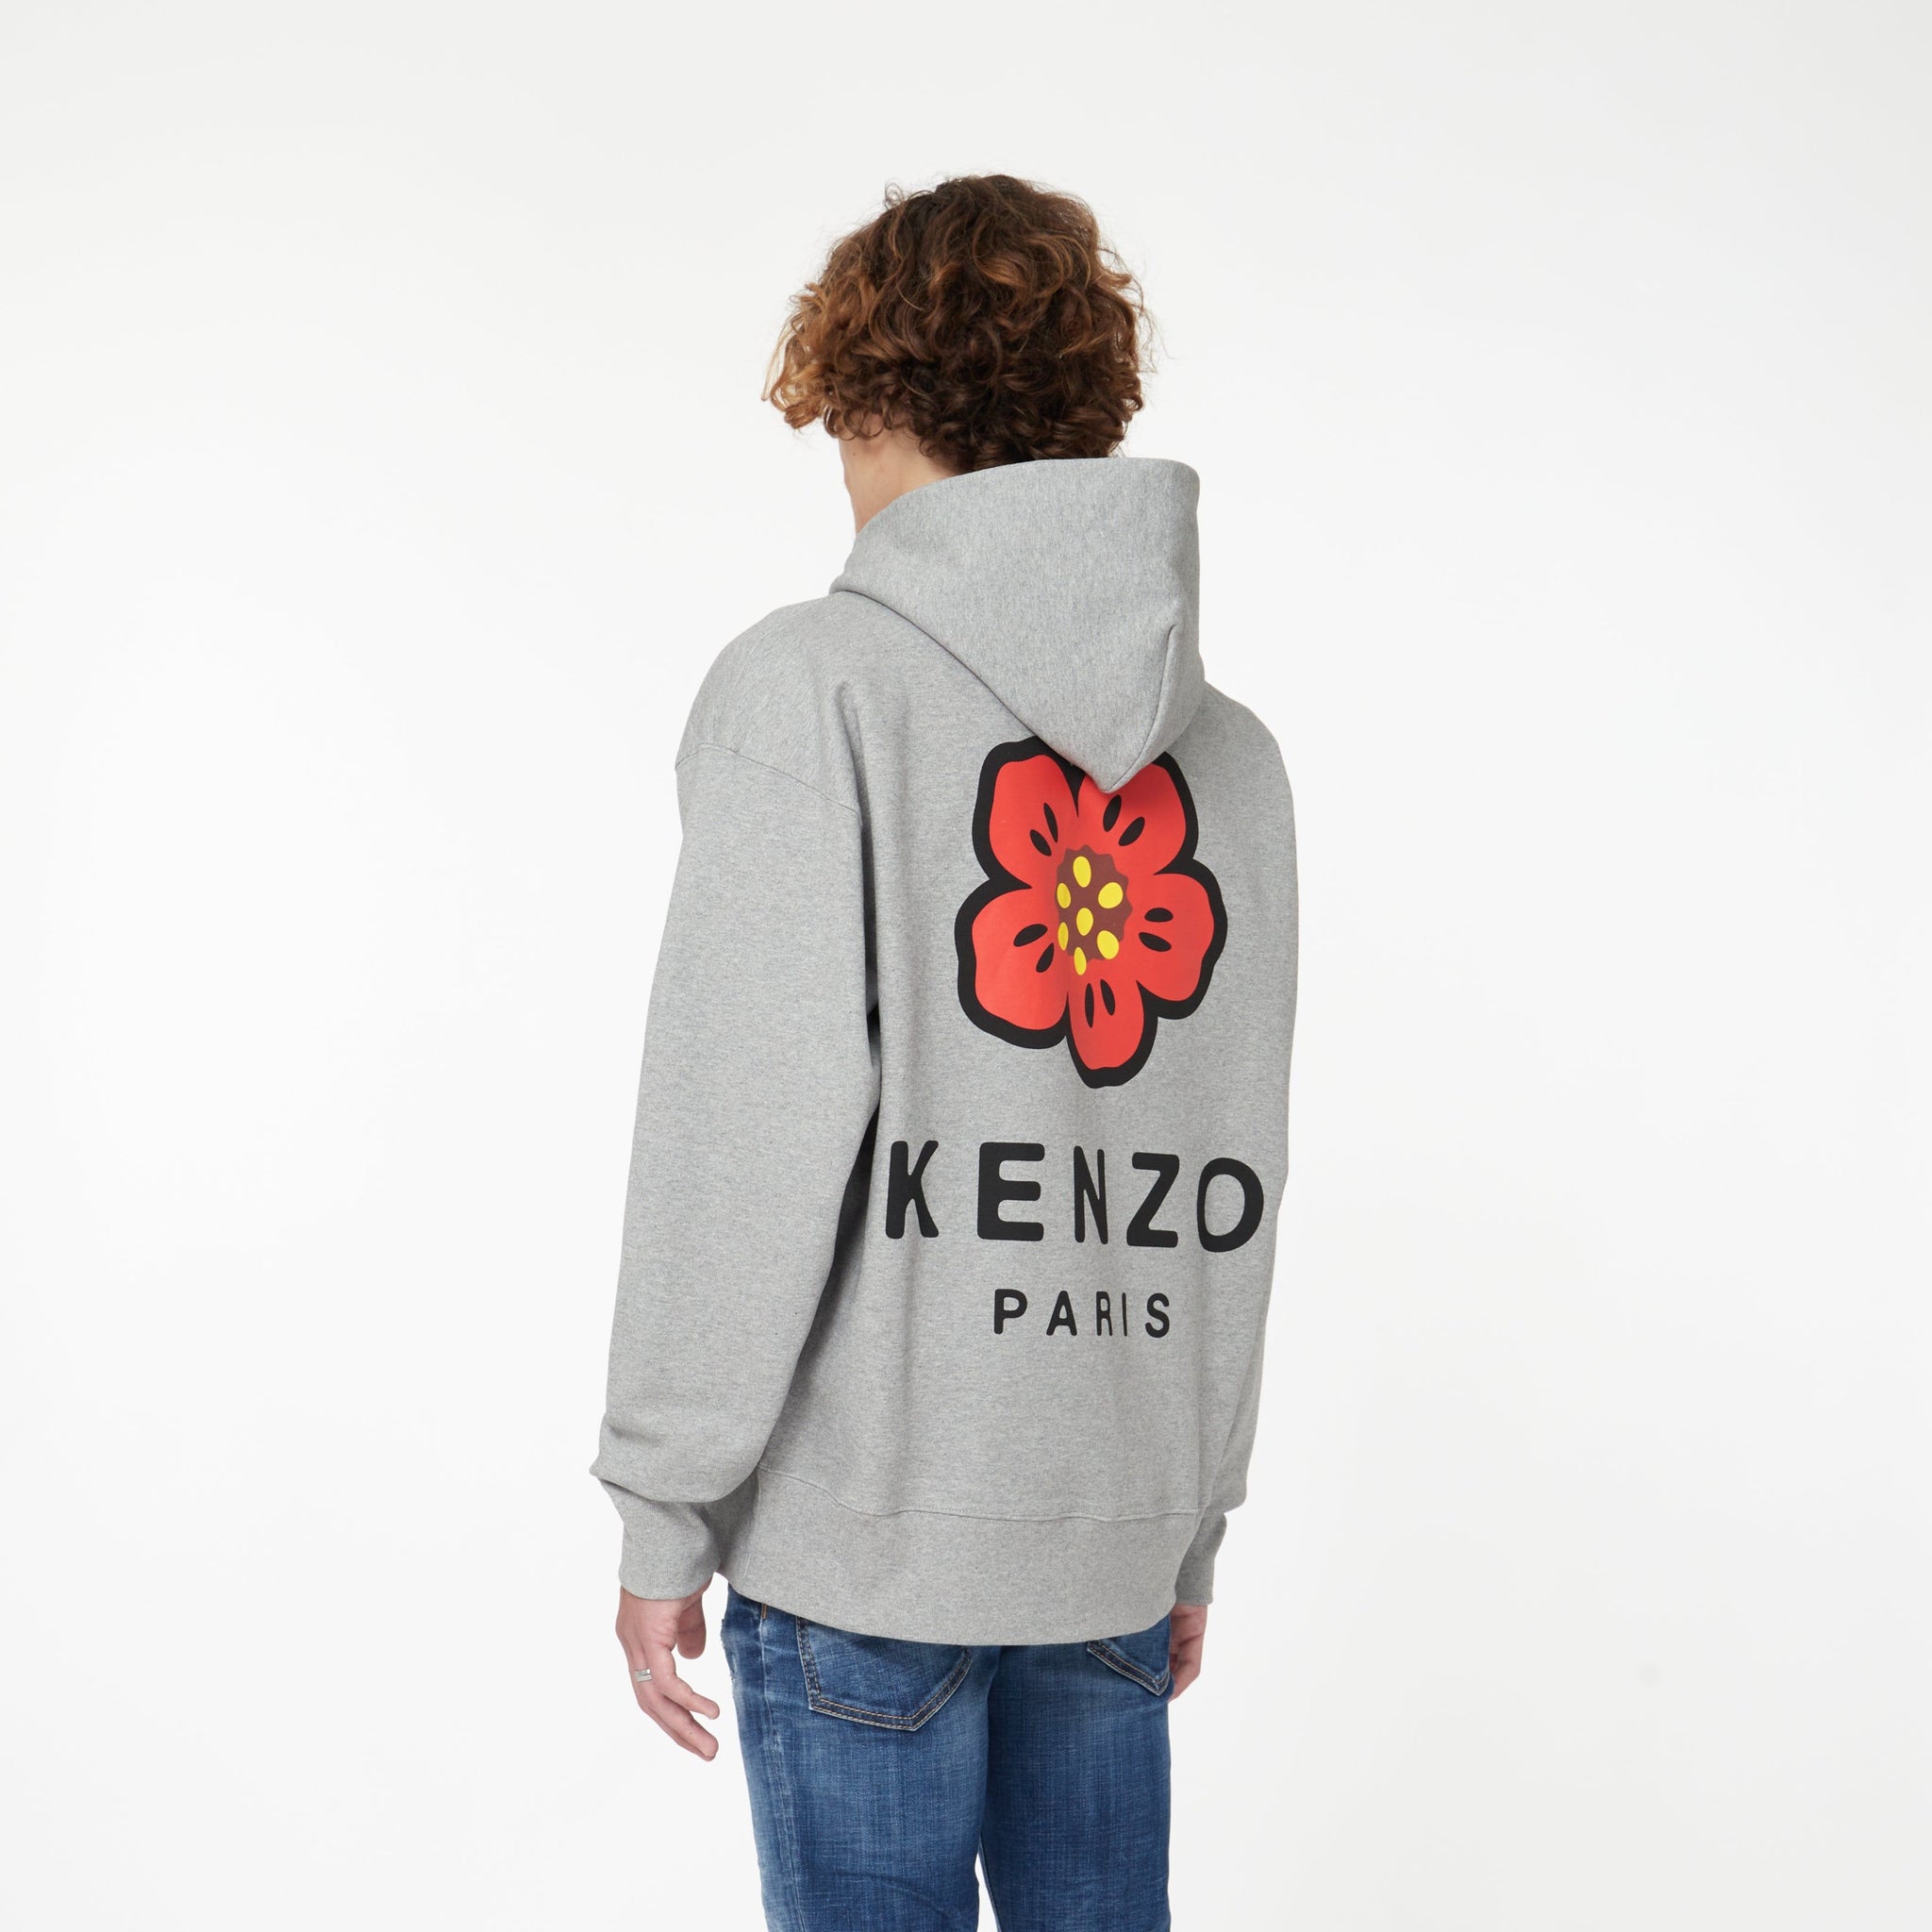 Sweatshirt Oversize Boke Flower - Lesthete kenzo